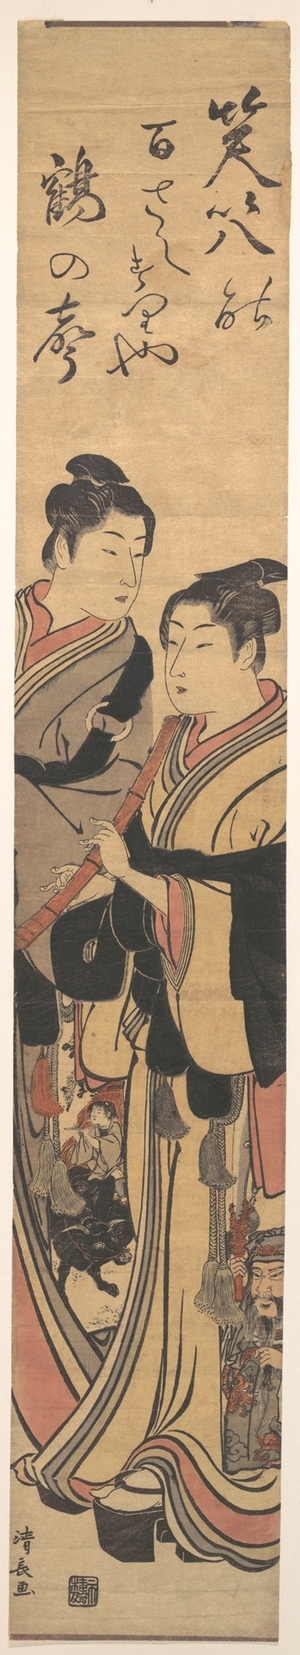 Torii Kiyonaga: Two Men, One Playing a Flute - Metropolitan Museum of Art